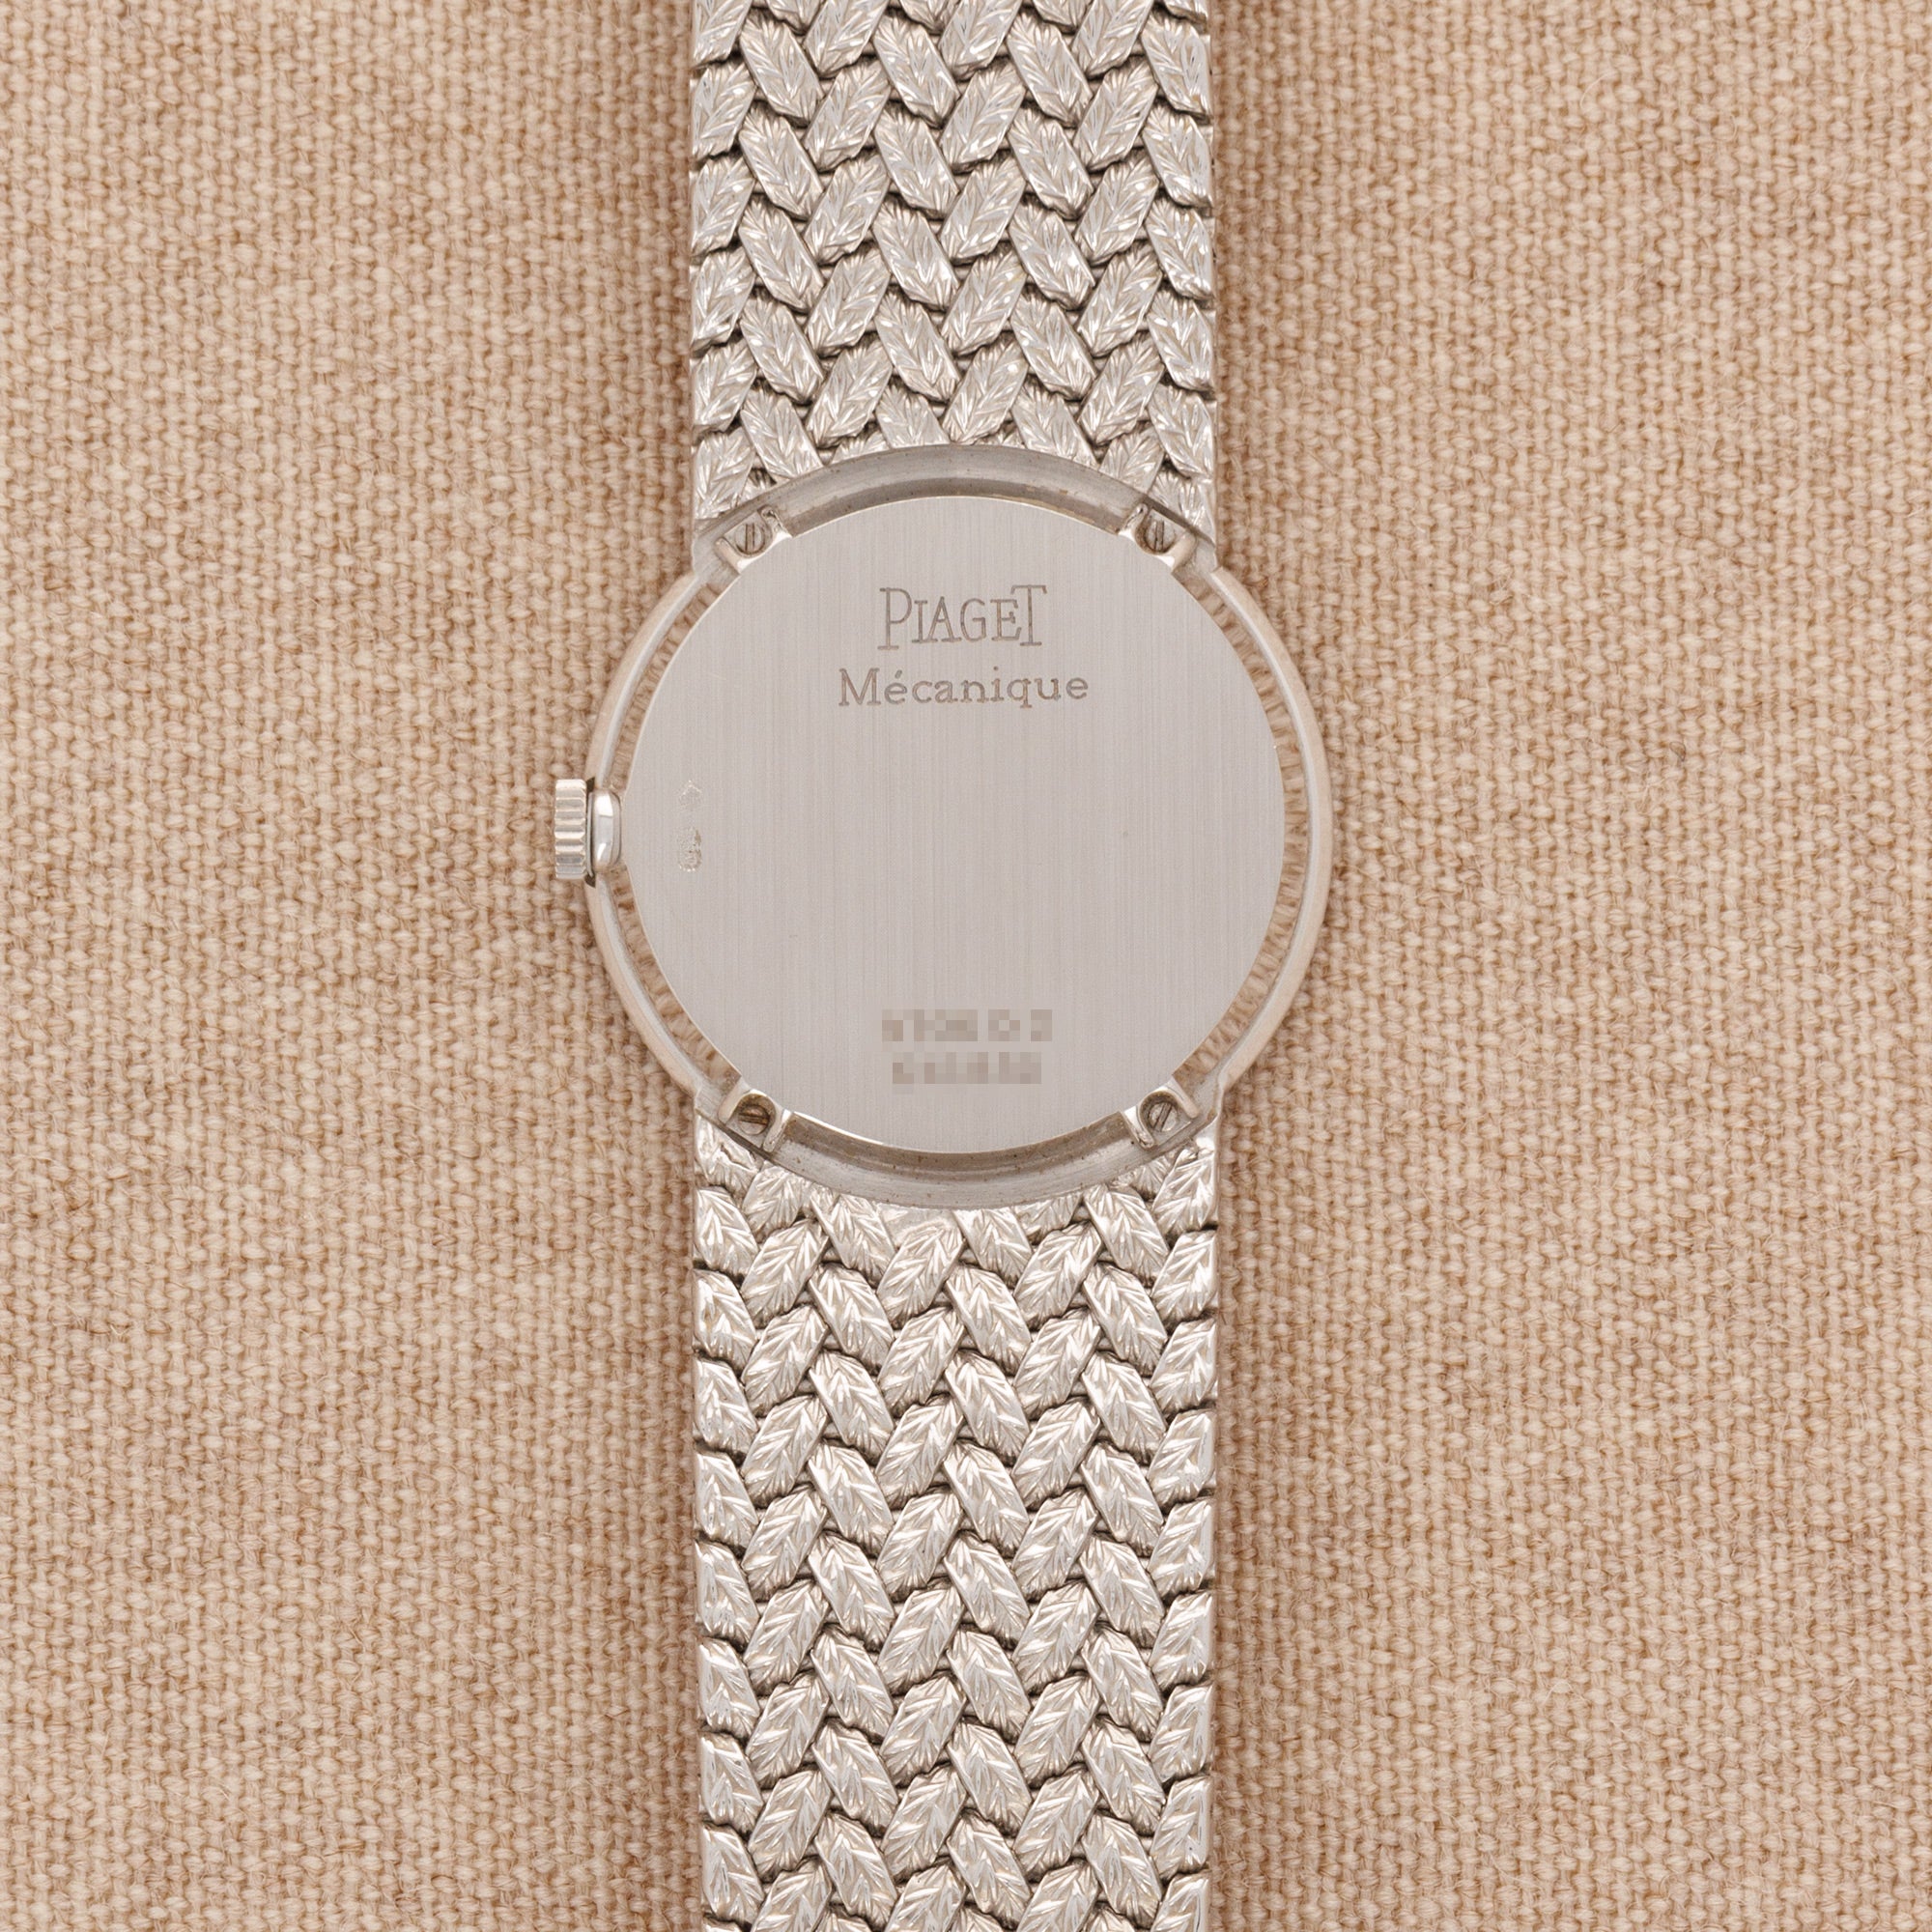 Piaget White Gold and Lapis Lazuli Watch Ref. 9706